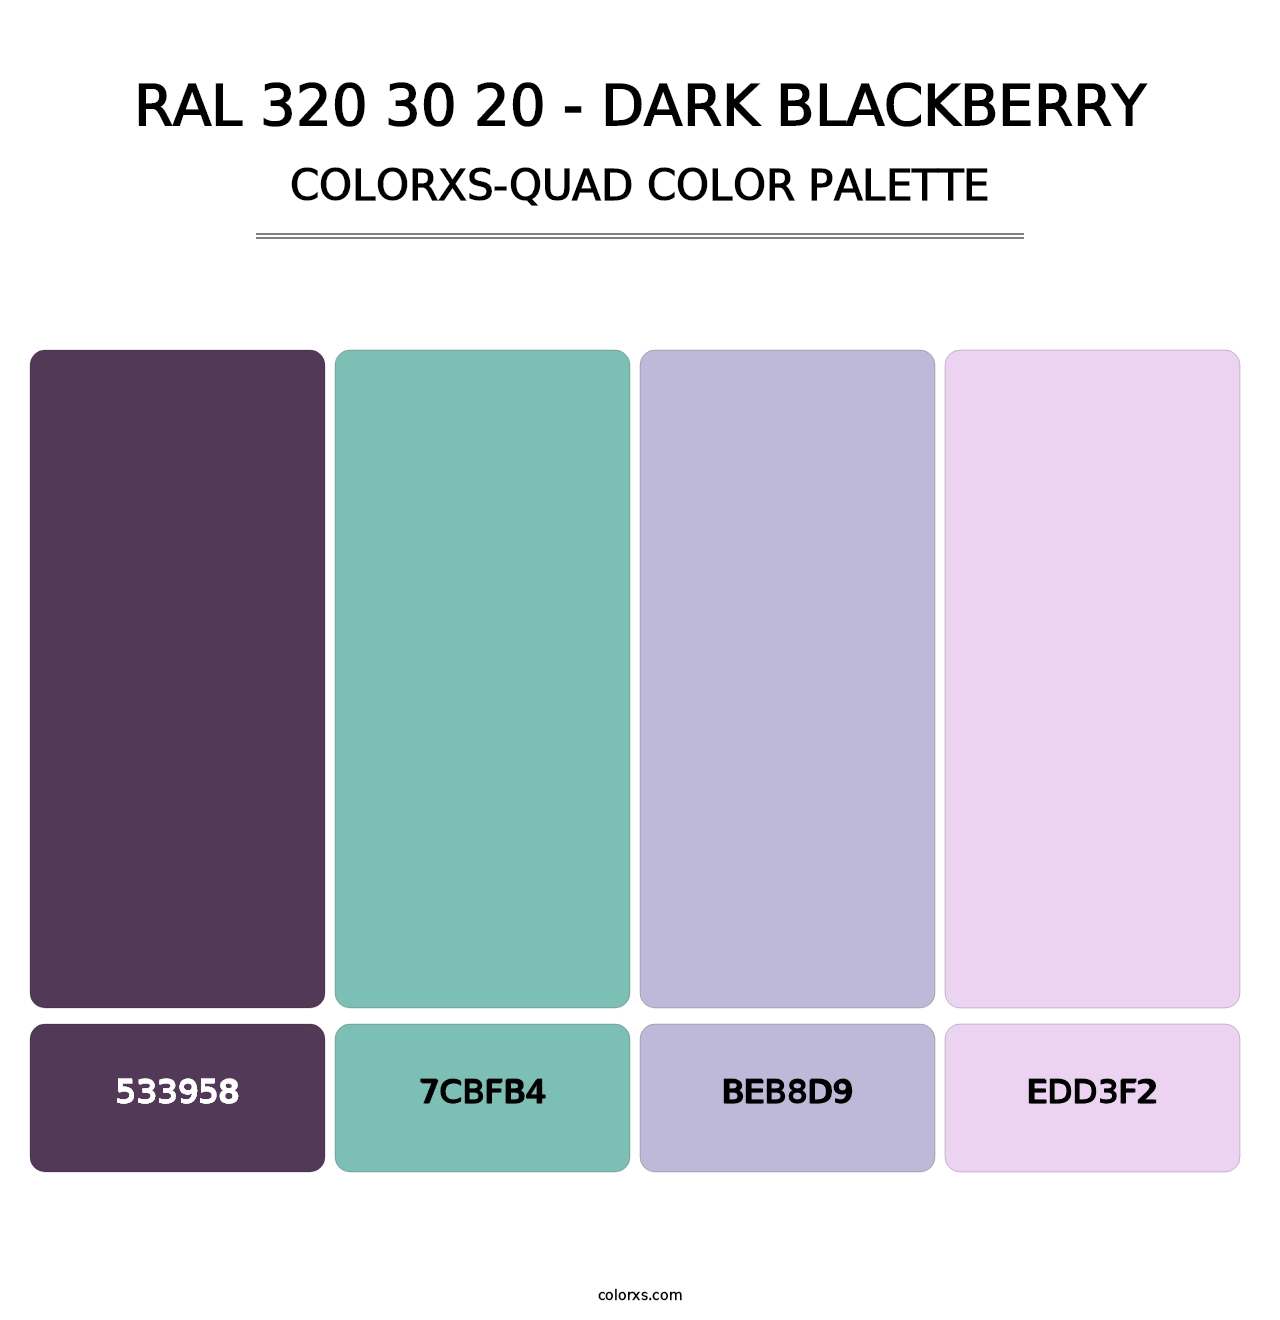 RAL 320 30 20 - Dark Blackberry - Colorxs Quad Palette